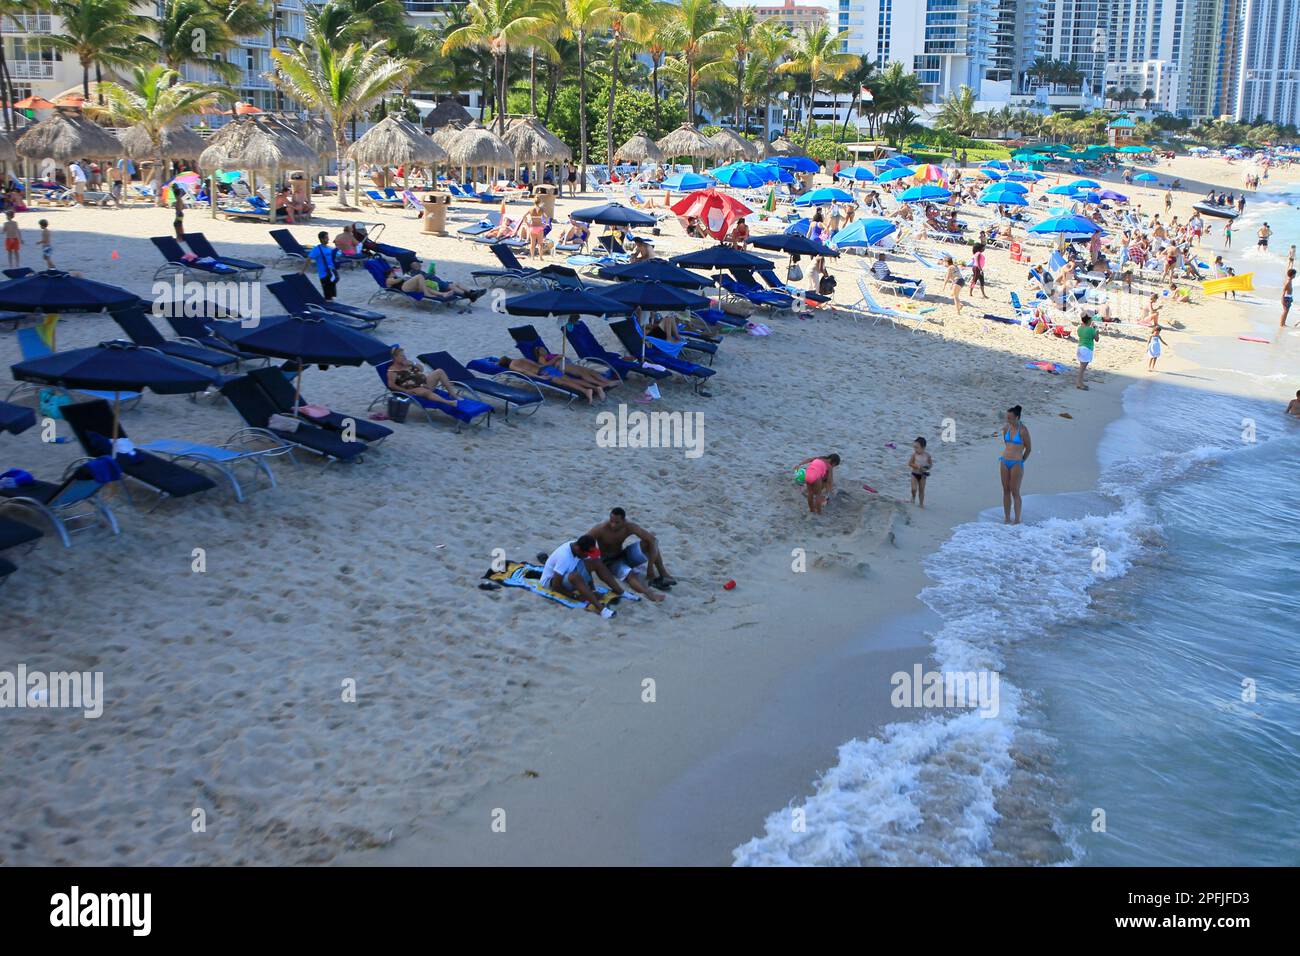 Sunny Isles Miami, FL. Tourist are seen in the beach of Sunny Isles.Photo by: José Bula Stock Photo